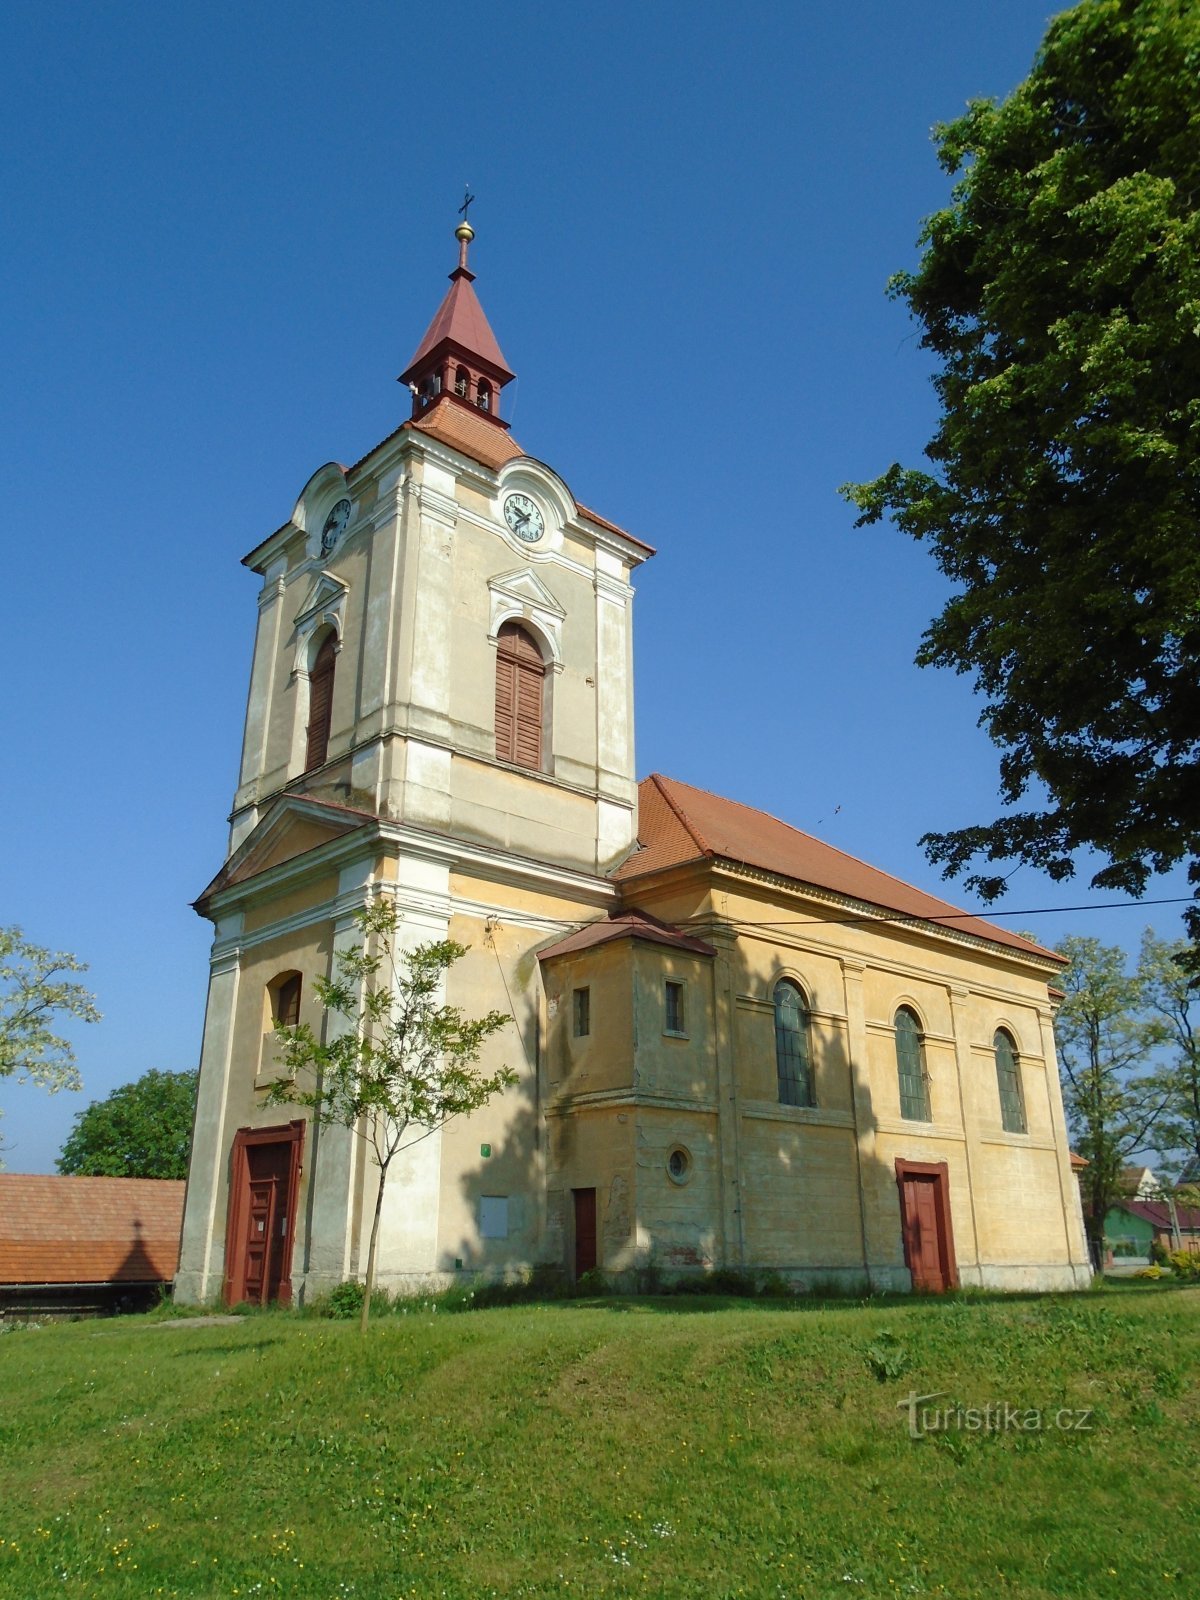 Église de St. Pierre et Paul (Jeníkovice, 12.5.2018 août XNUMX)